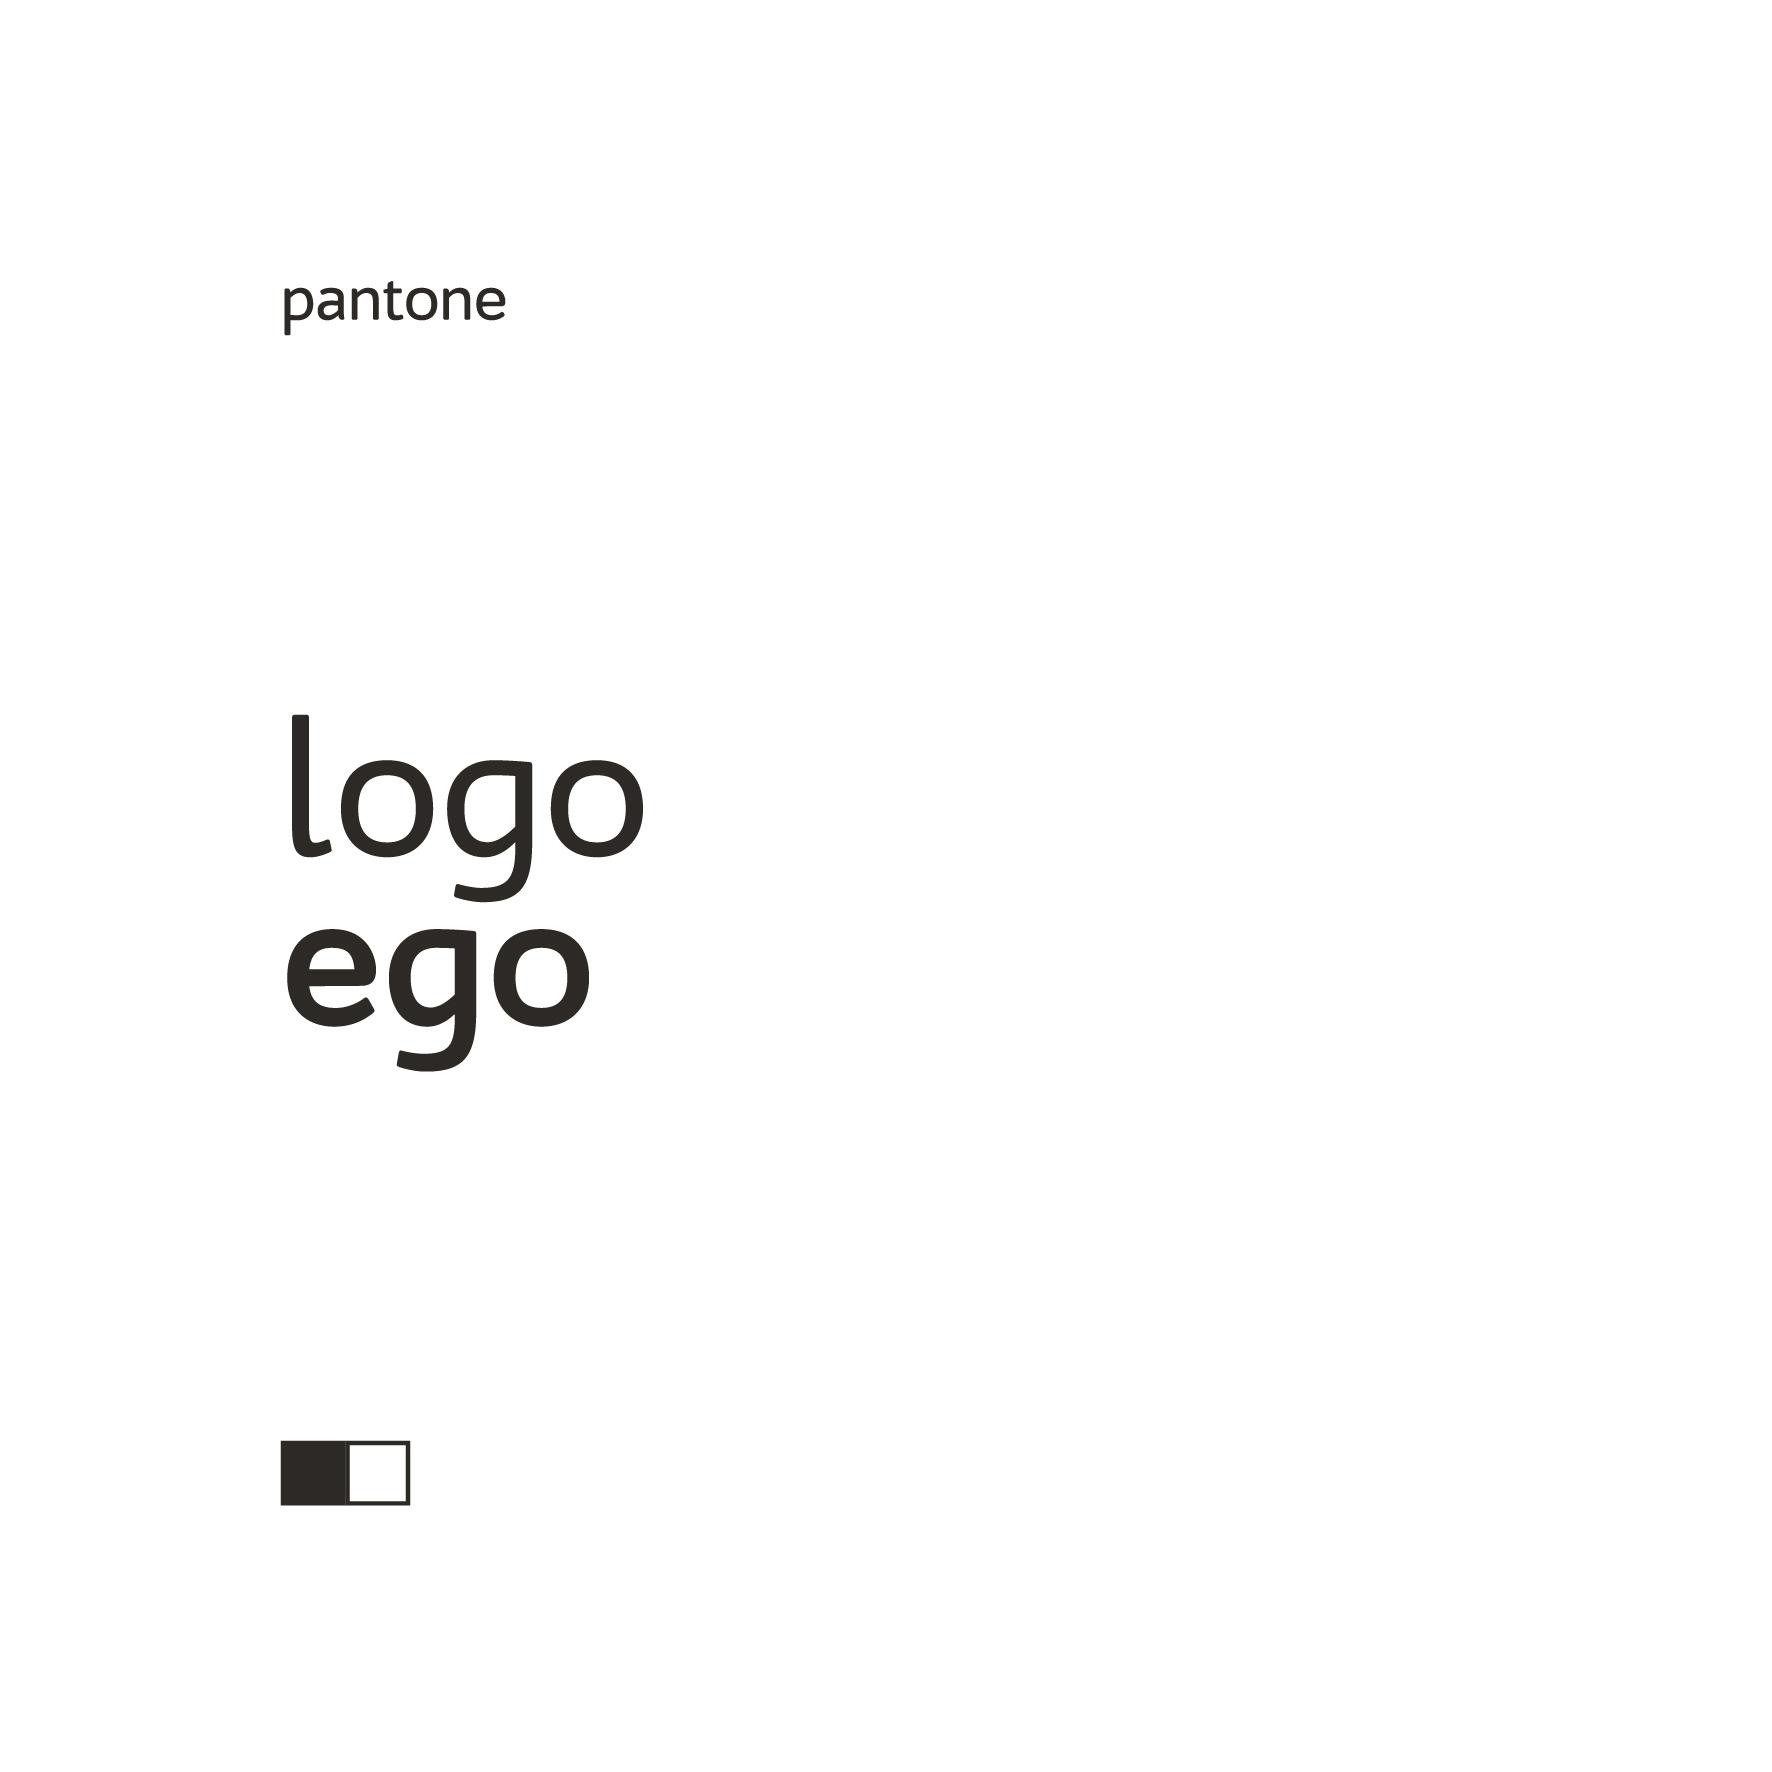 LOGO - EGO (PANTONE)